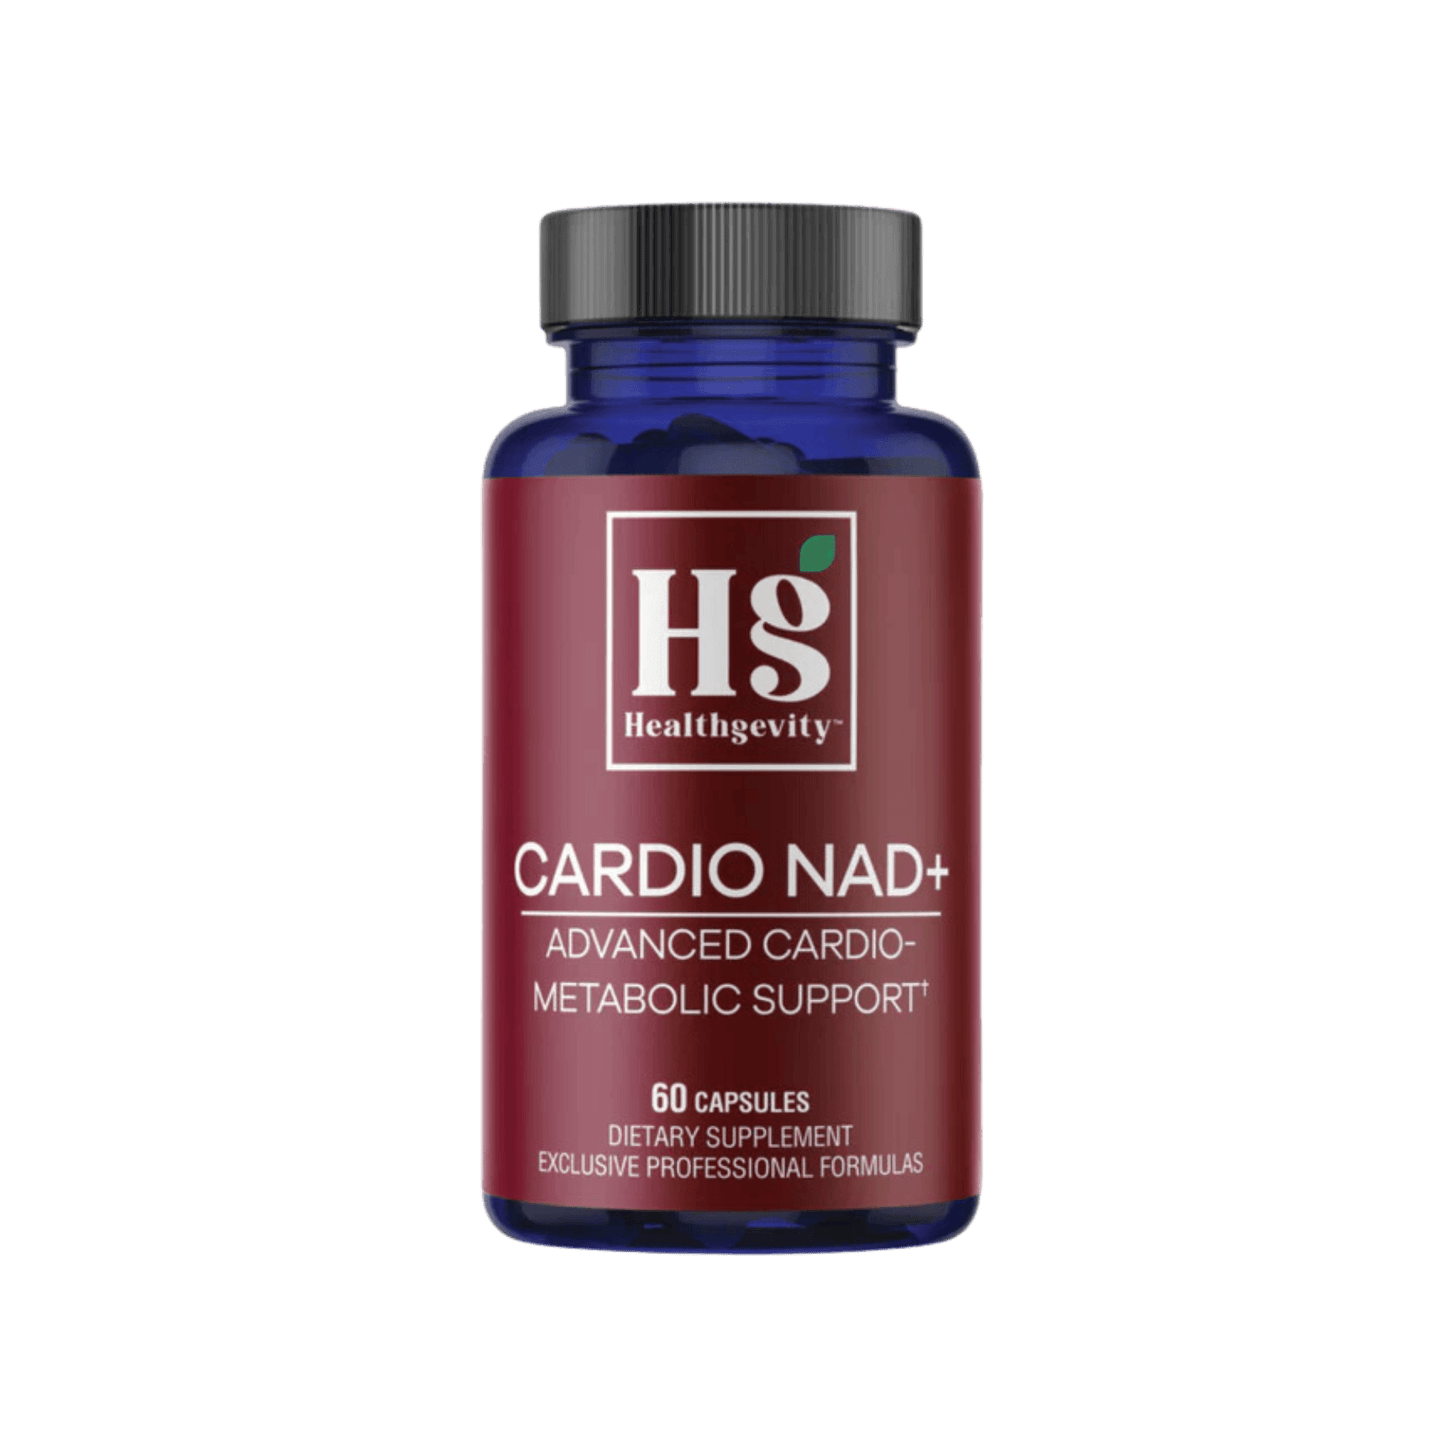 Healthgevity Cardio NAD